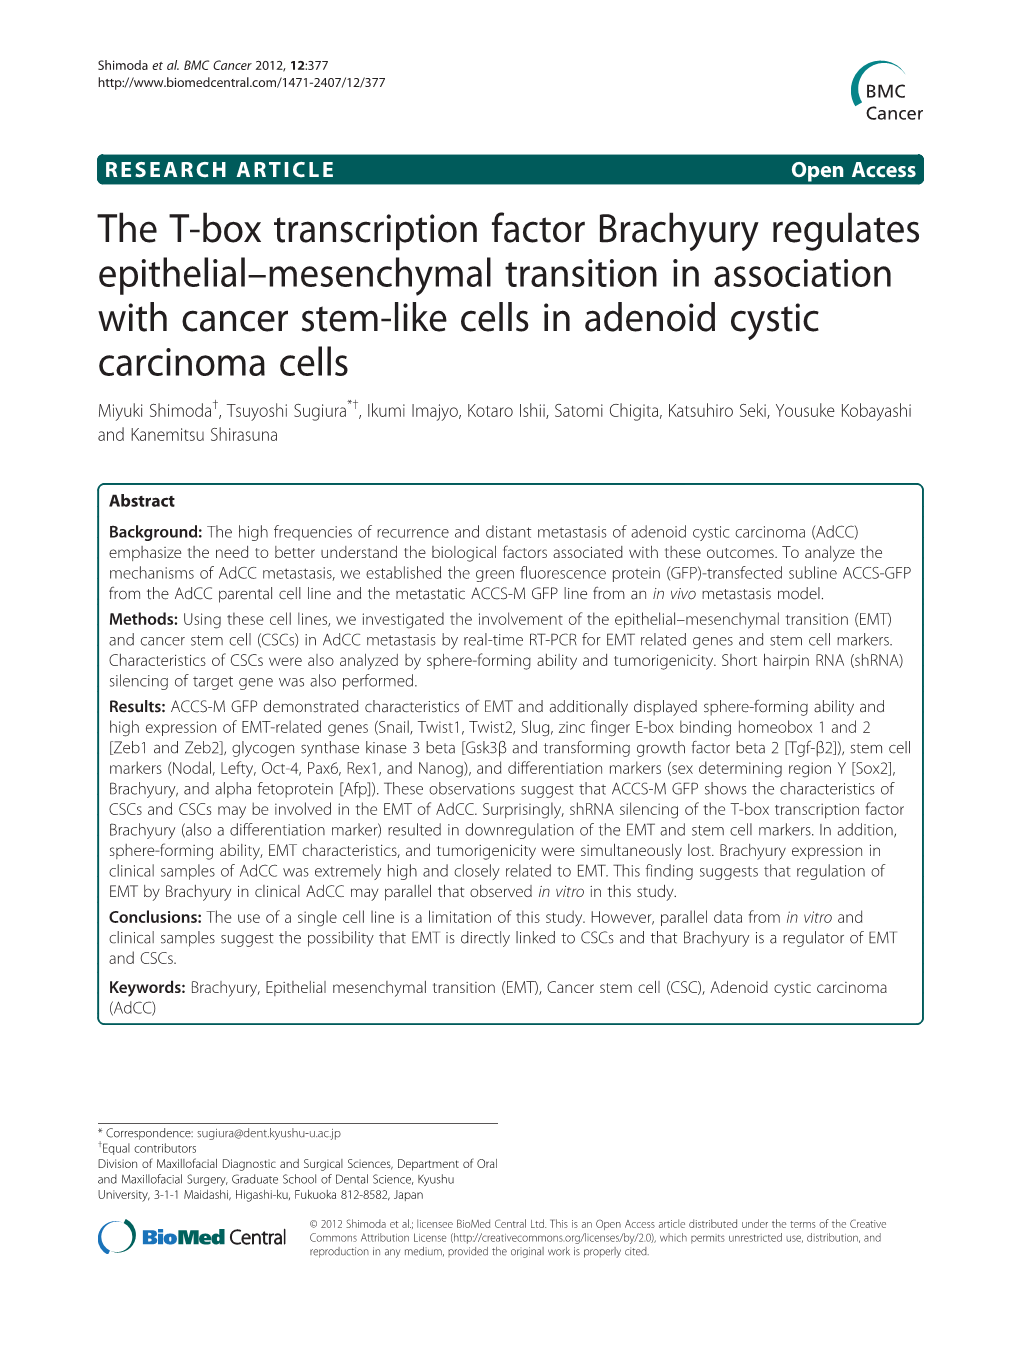 The T-Box Transcription Factor Brachyury Regulates Epithelial-Mesenchymal Transition in Association with Cancer Stem-Like Cells